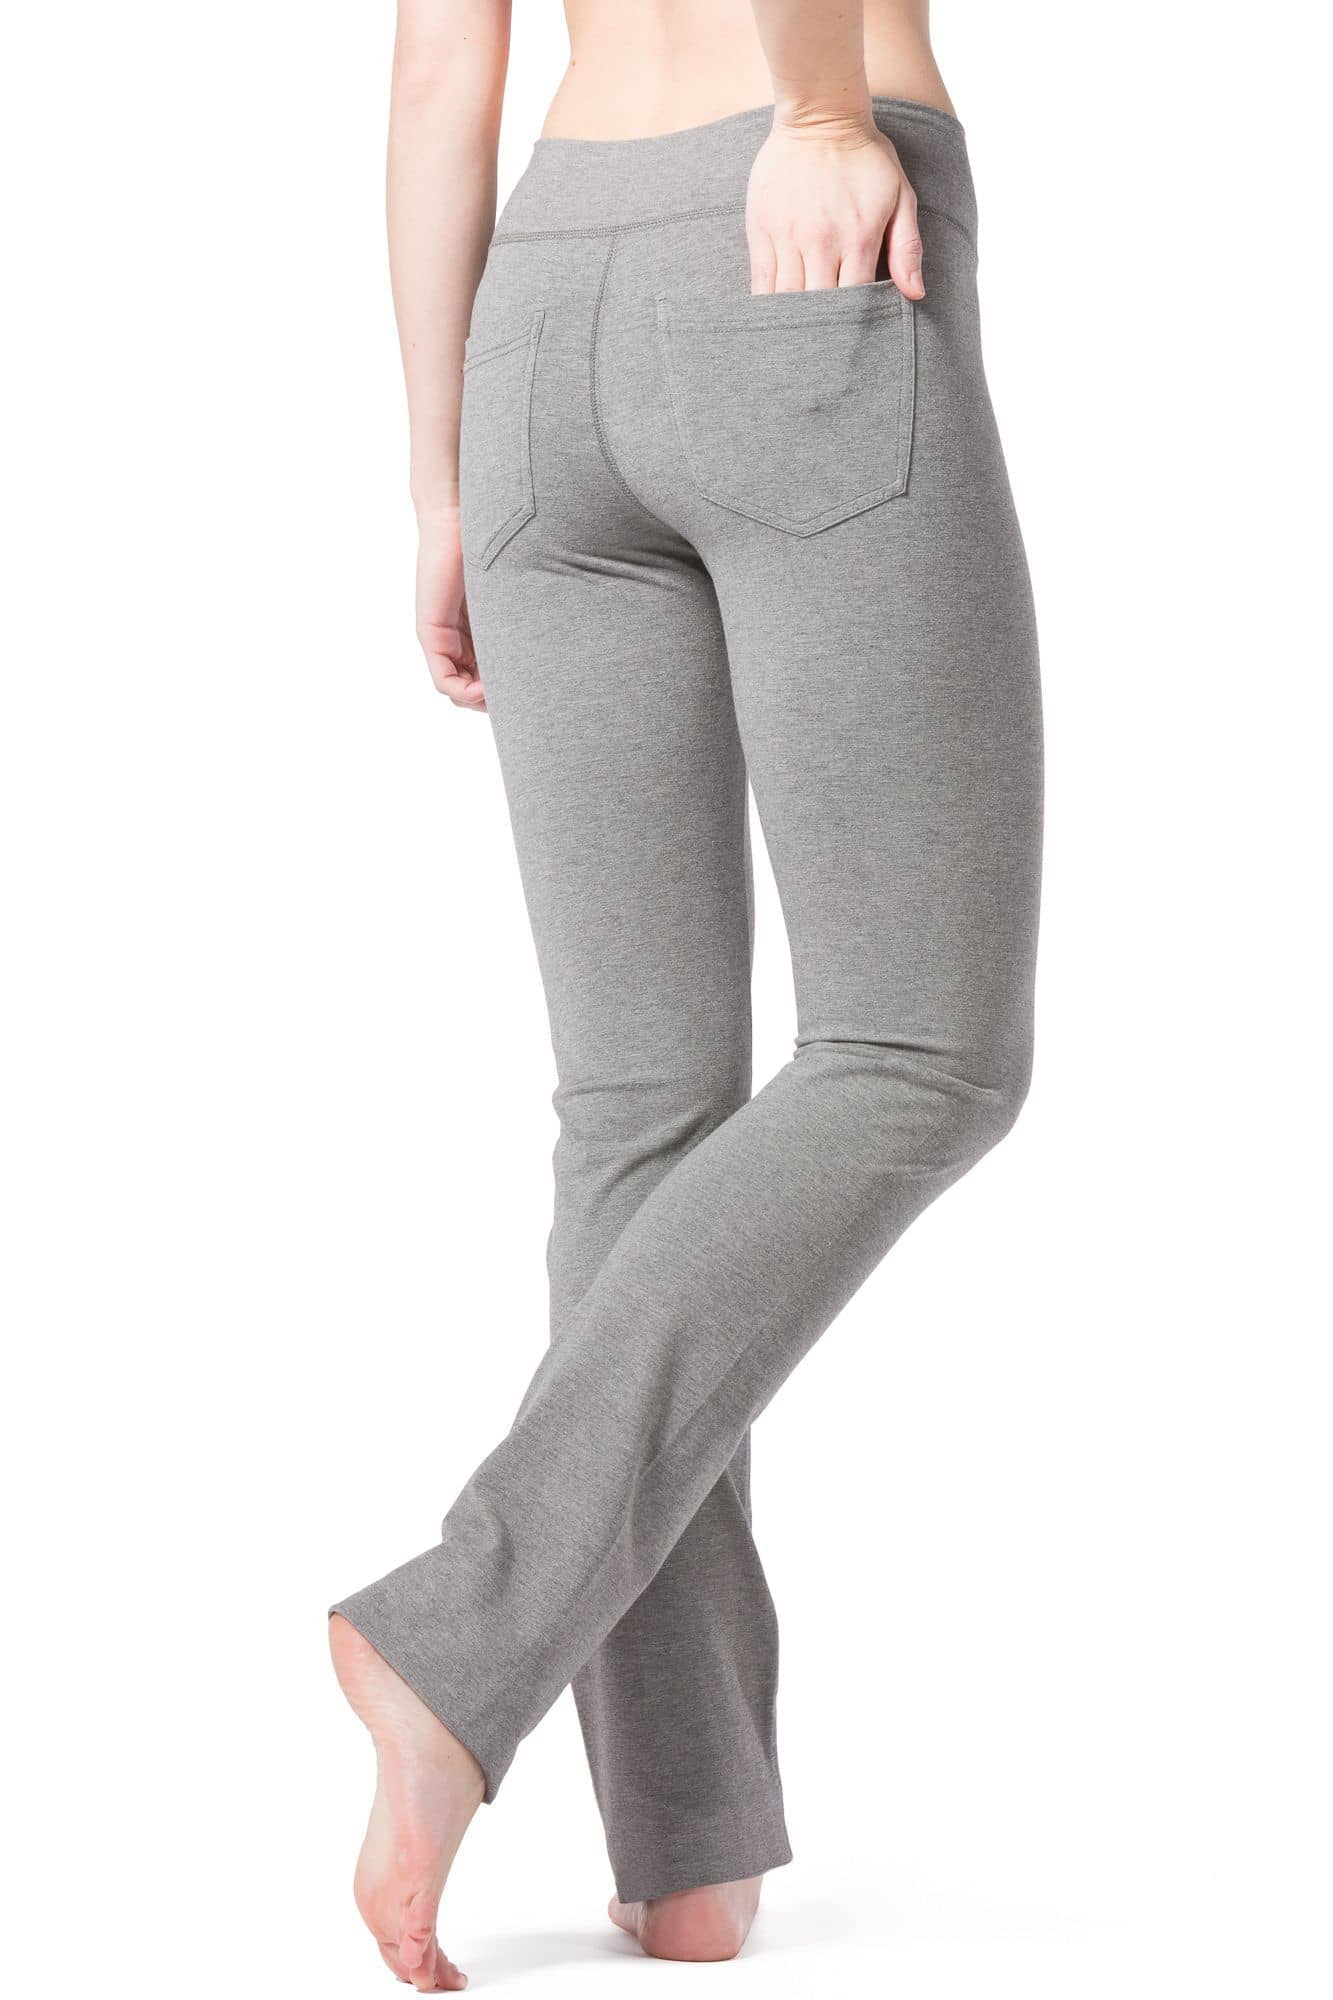 Cathalem Yoga Pants Women with Pockets Cotton High Pants Wet Yoga Pants  Women Waist Sports Fashion Pants Crazy Yoga Mens Pants Pants Grey Large